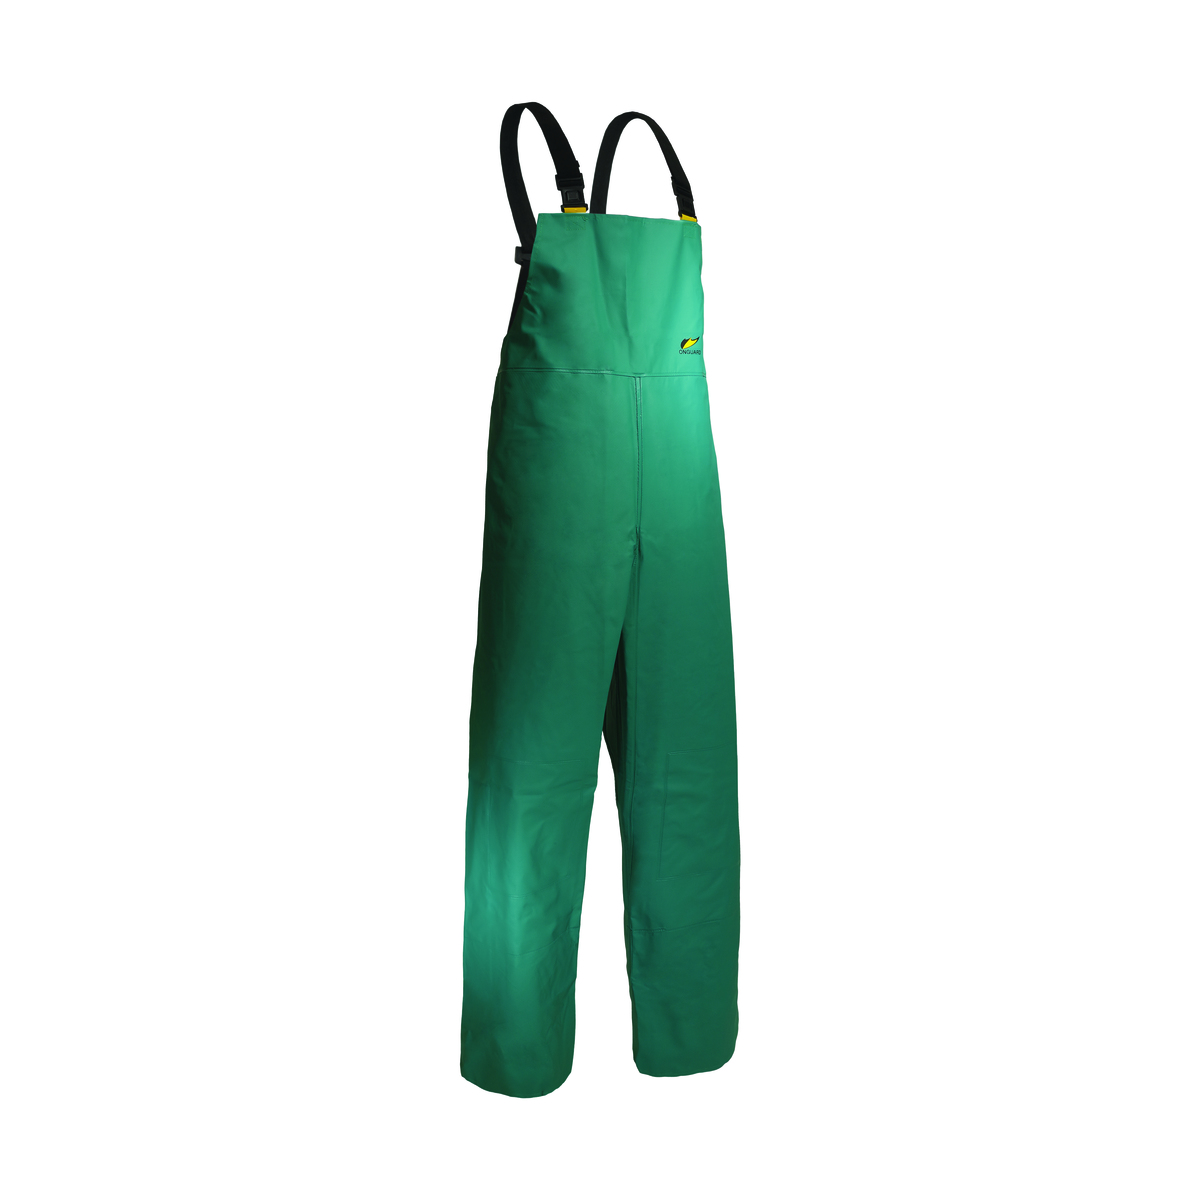 Dunlop® Protective Footwear Medium Green Chemtex .42 mm PVC On Nylon Polyester Bib Pants